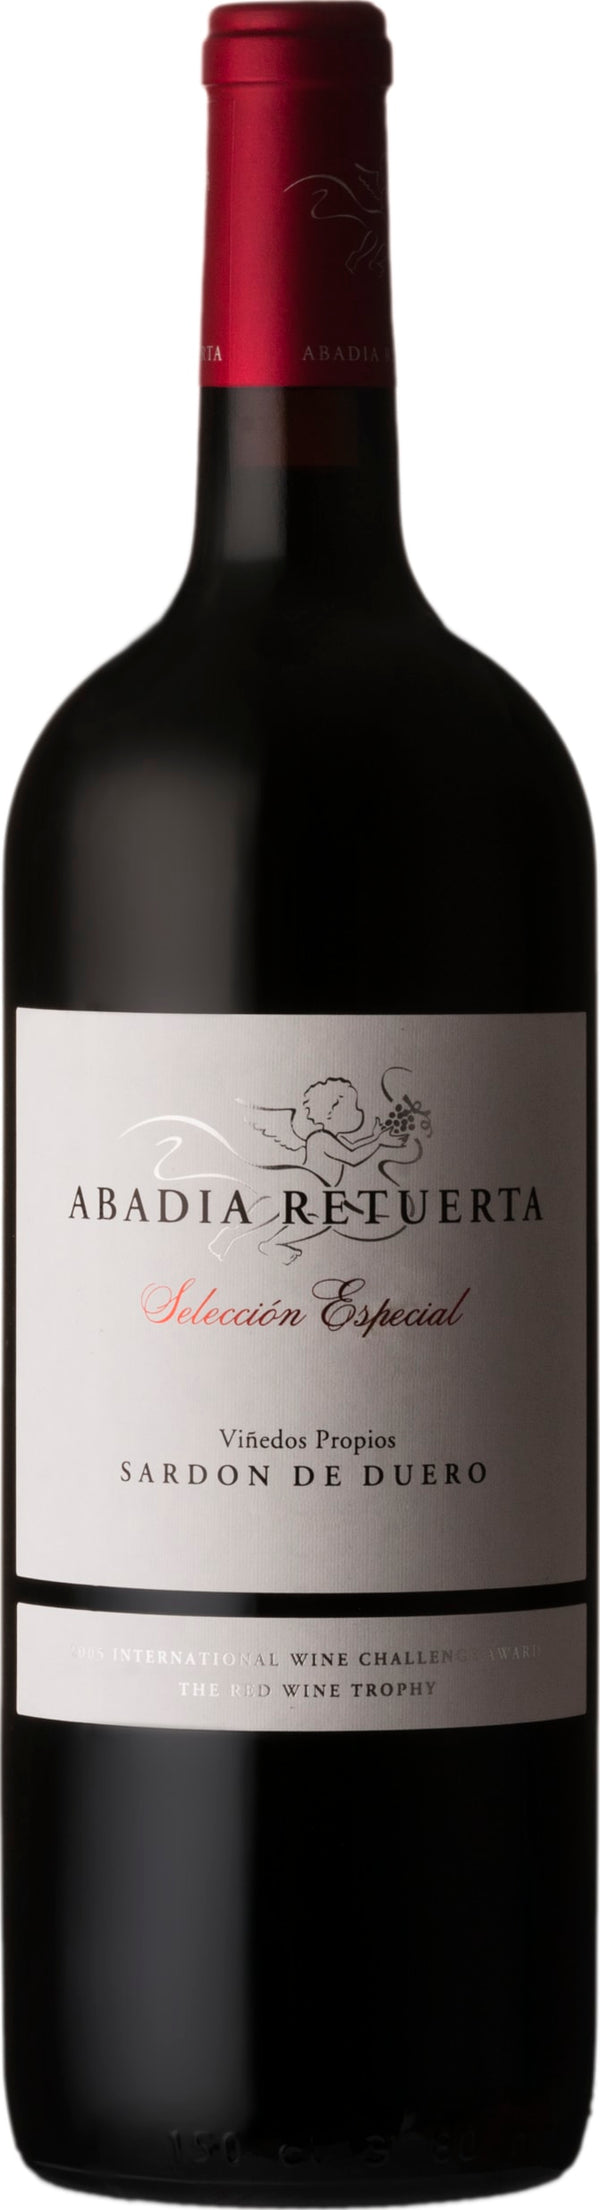 Abadia Retuerta Seleccion Especial Magnum 2018 6x75cl - Just Wines 